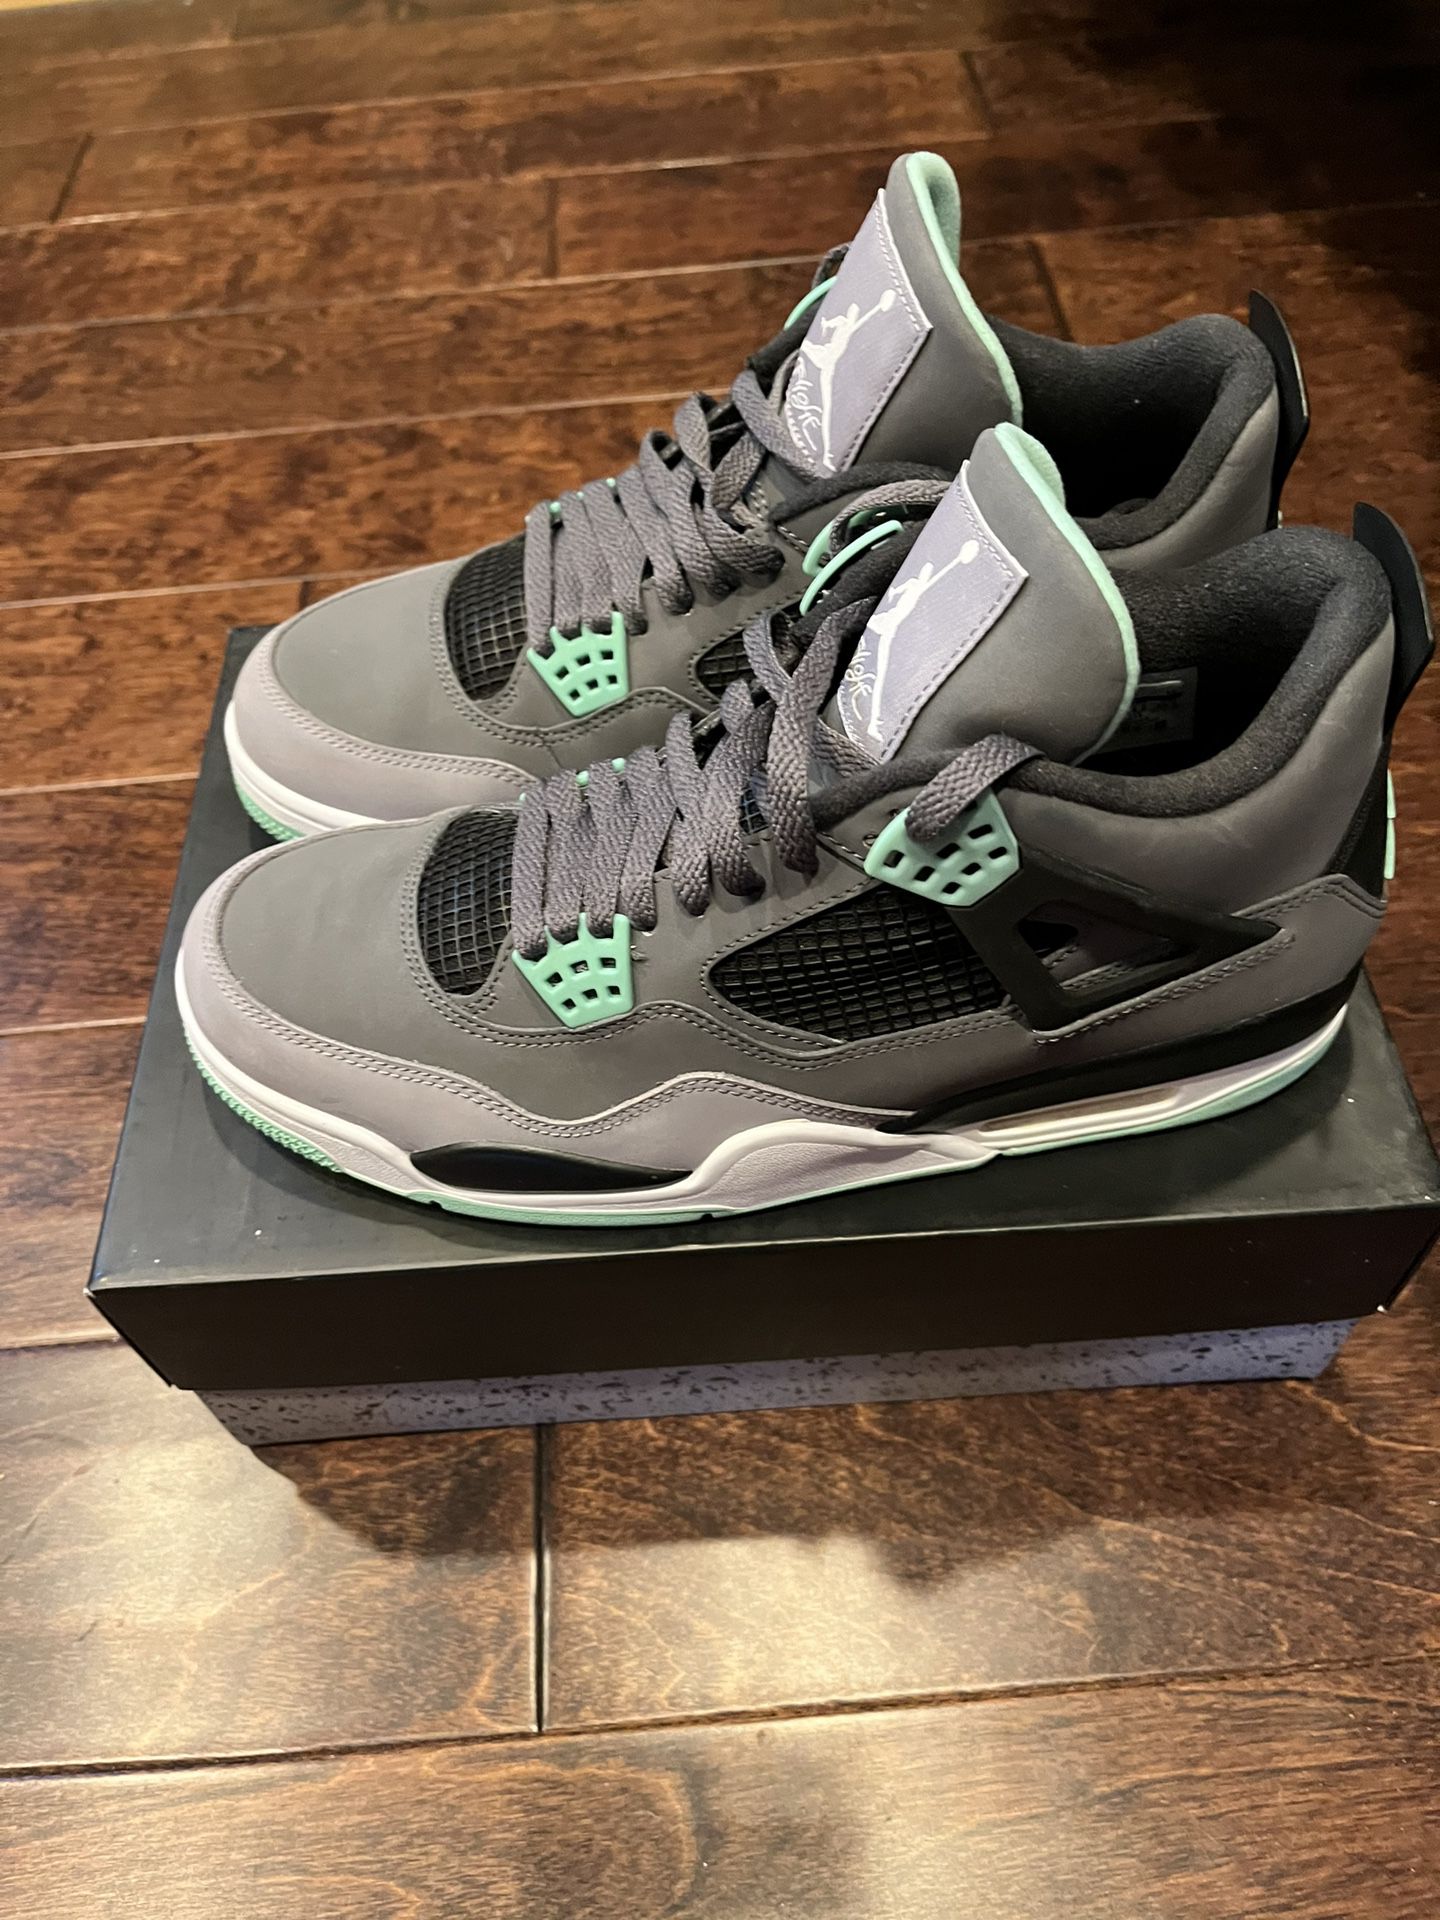 Nike Air Jordan 4 “Green Glows”